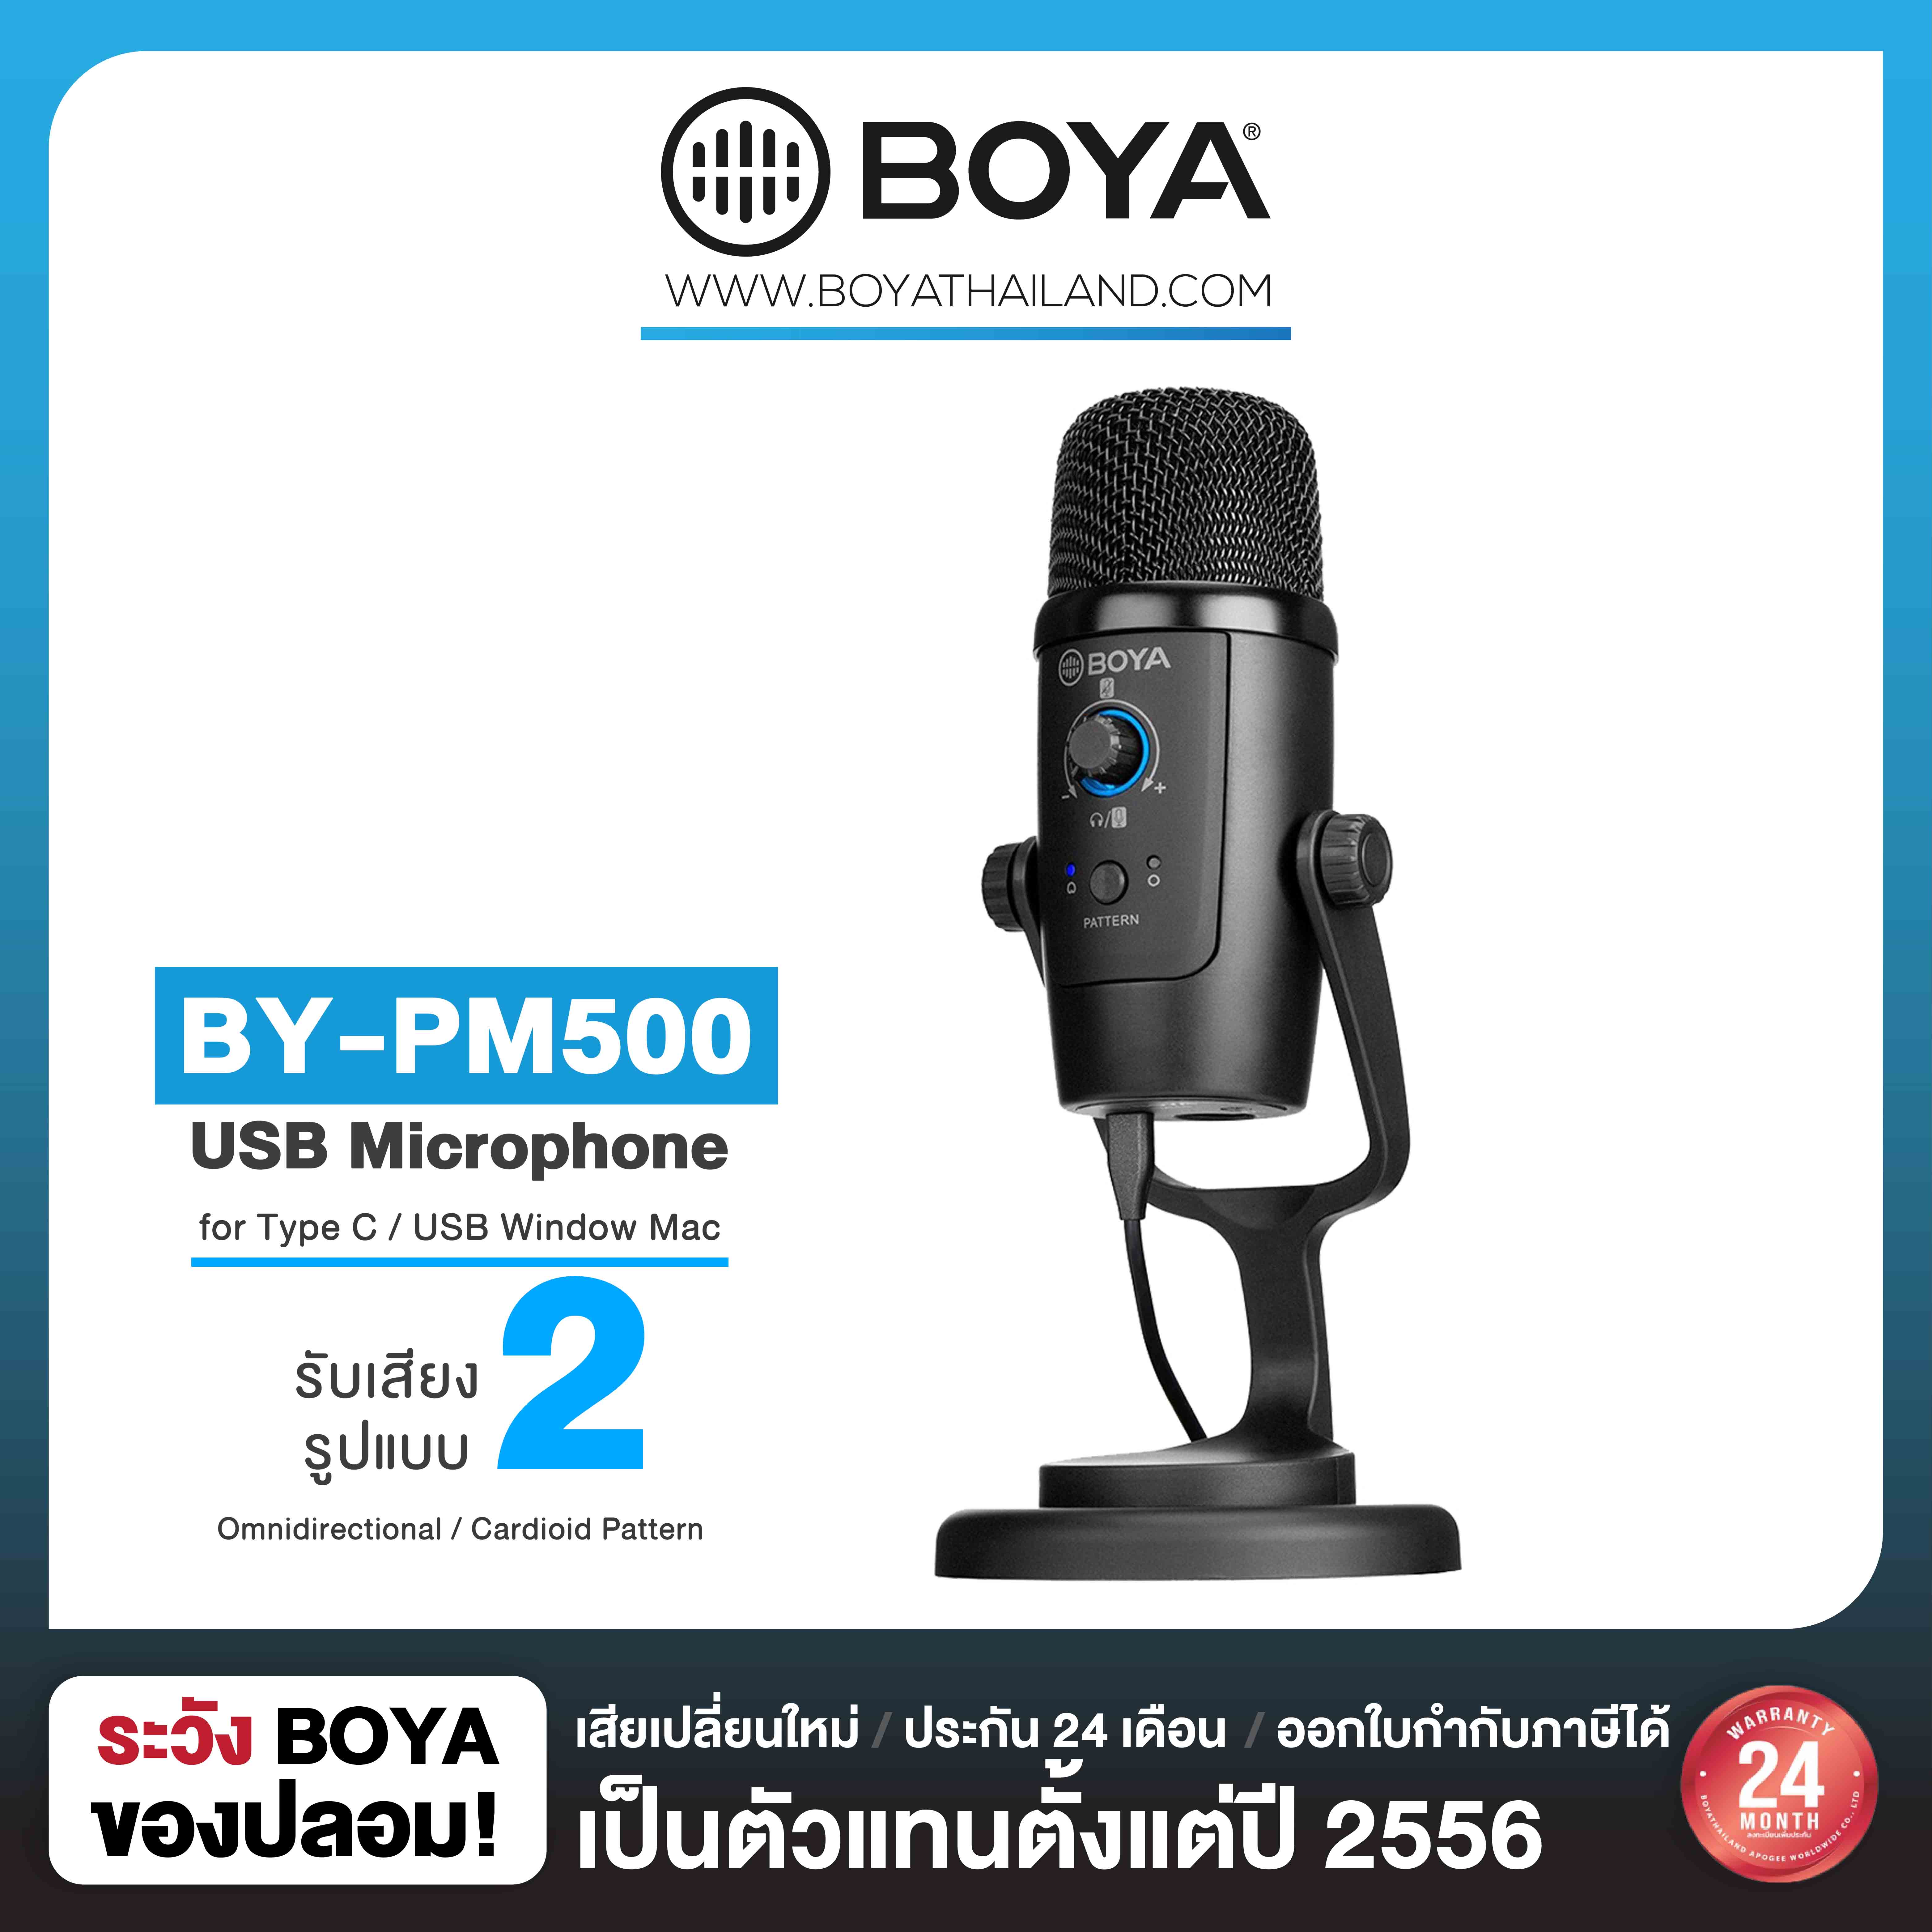 BOYA BY-PM500 USB Microphone